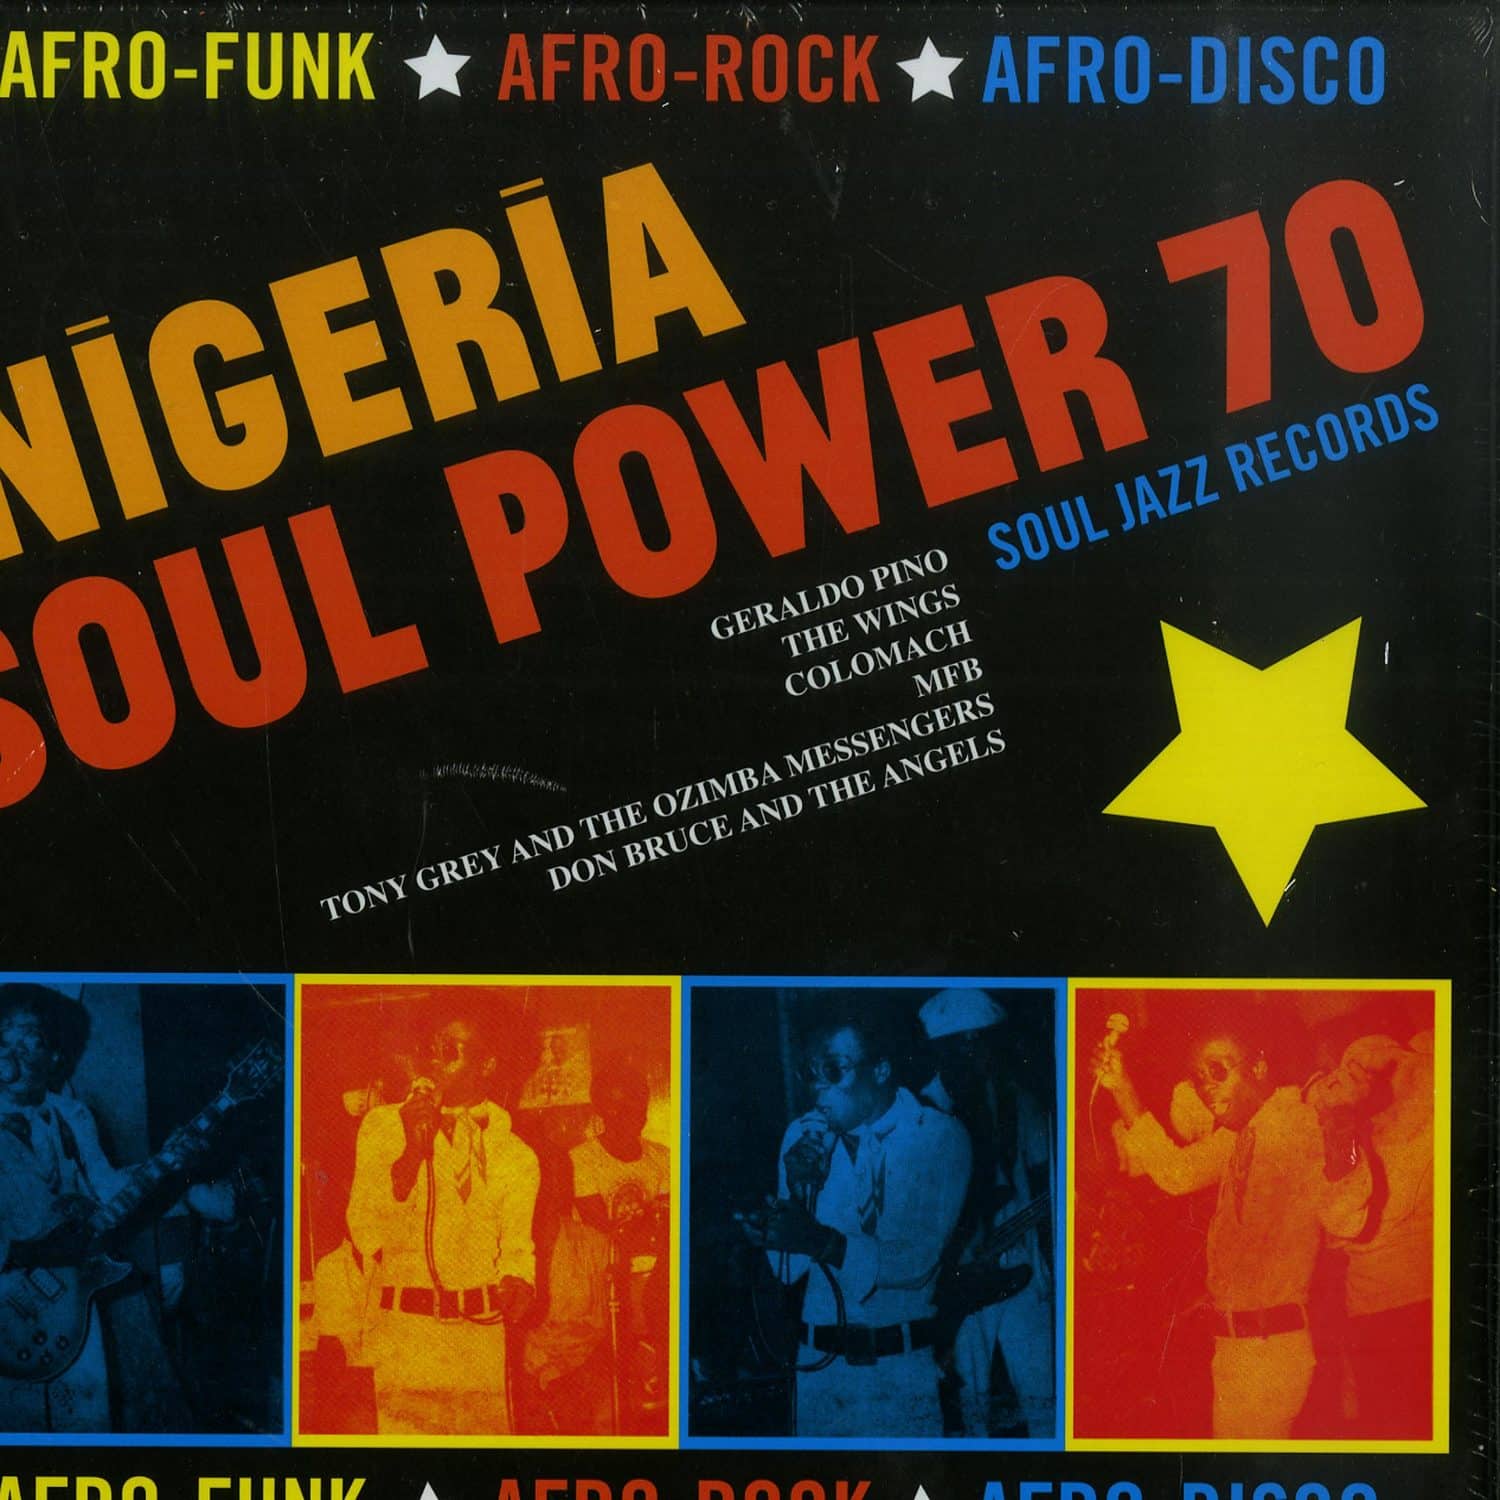 Various Artists - NIGERIA SOUL POWER 70 